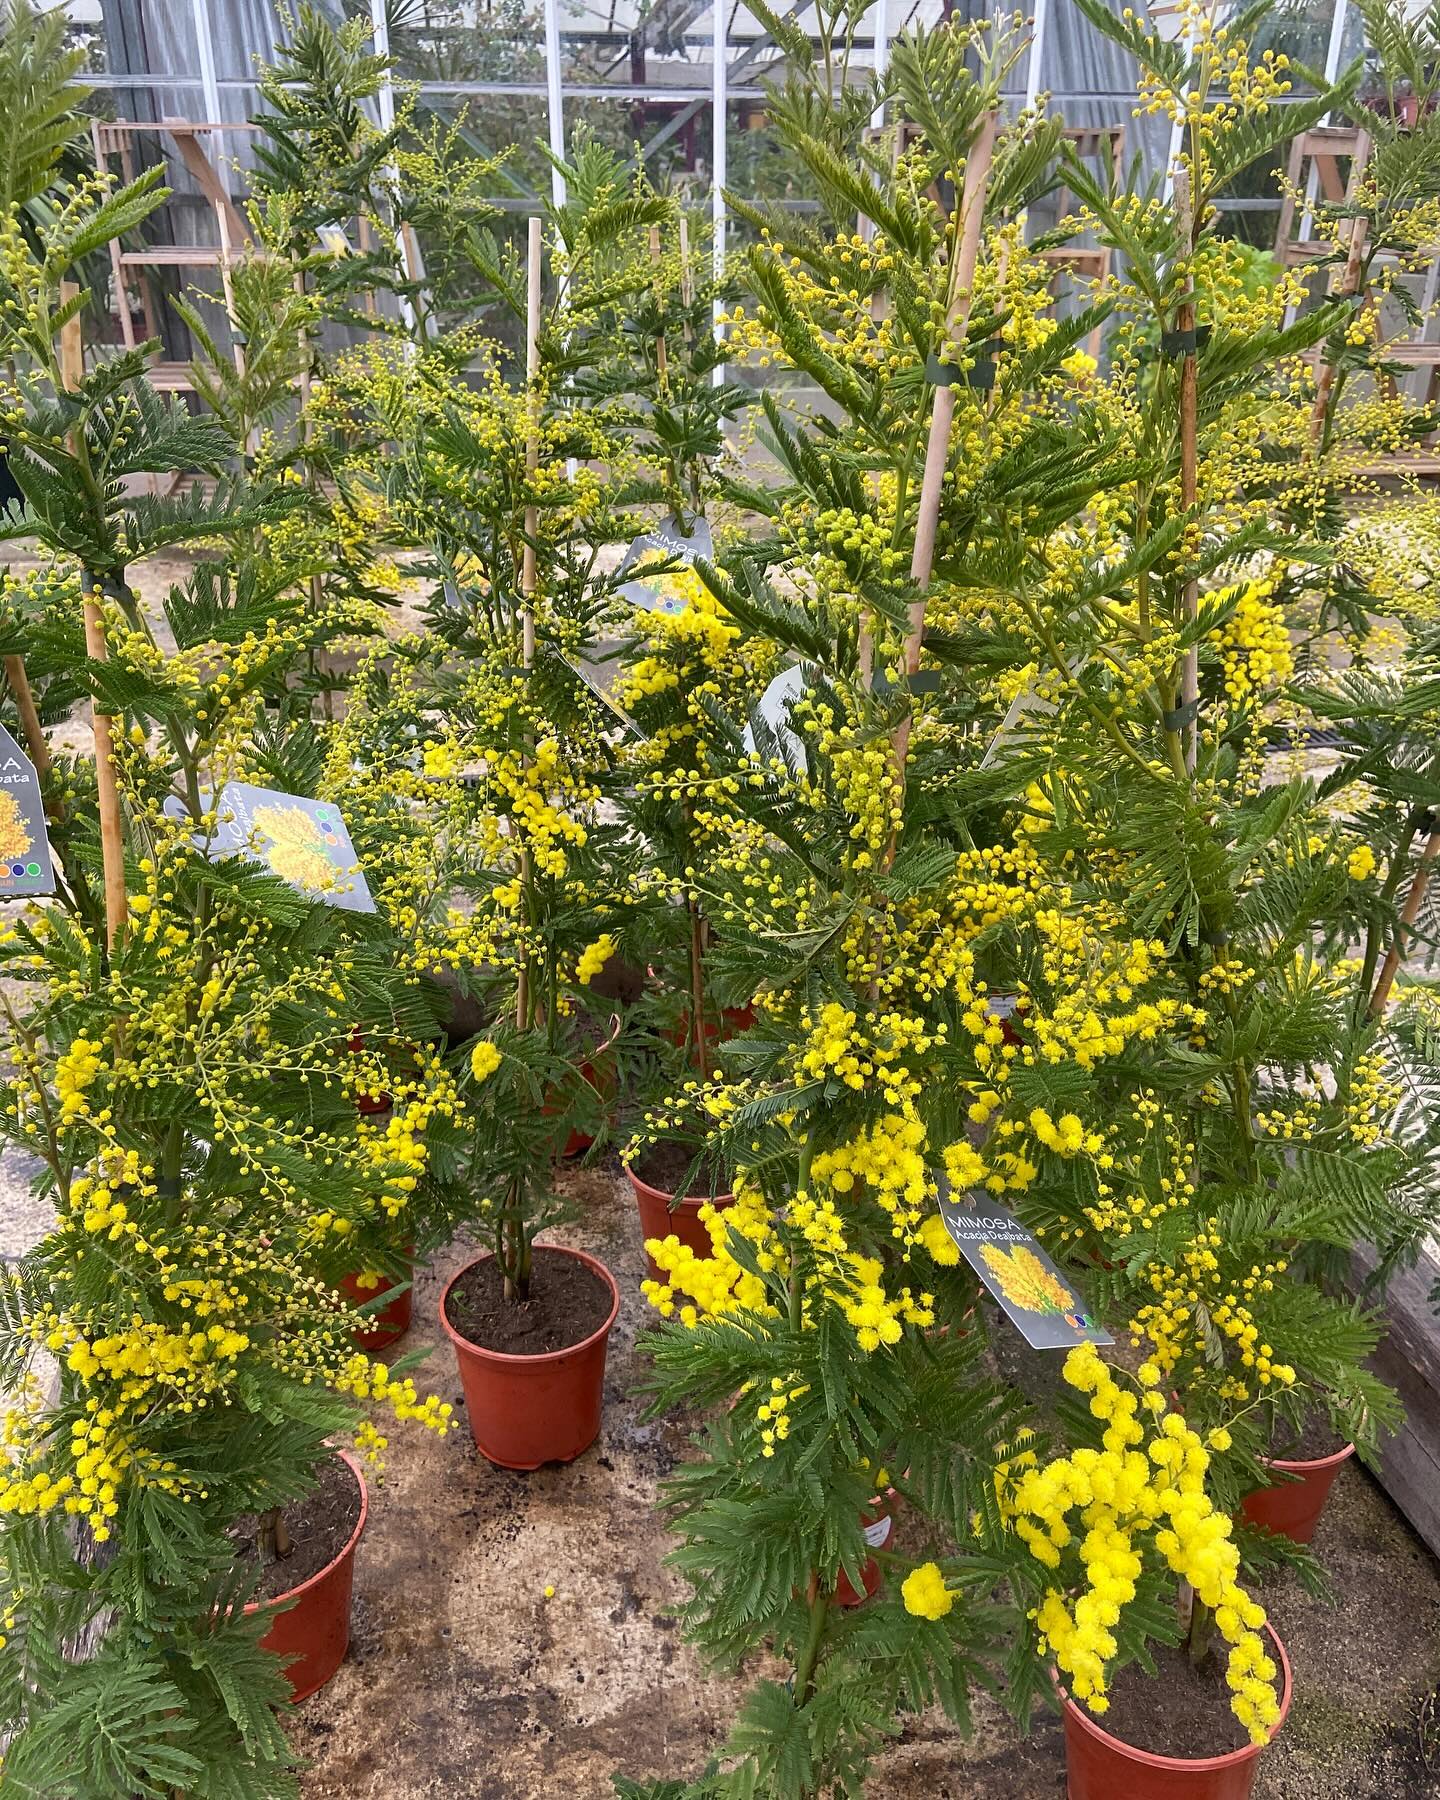 Toutes vos plantes fleuries, haies, arbustes, arbres de saison disponible 😍😍😍

#mimosa #iris #jasmin #jardinerie #salondeprovence #vitrolles #jardineriedeletang